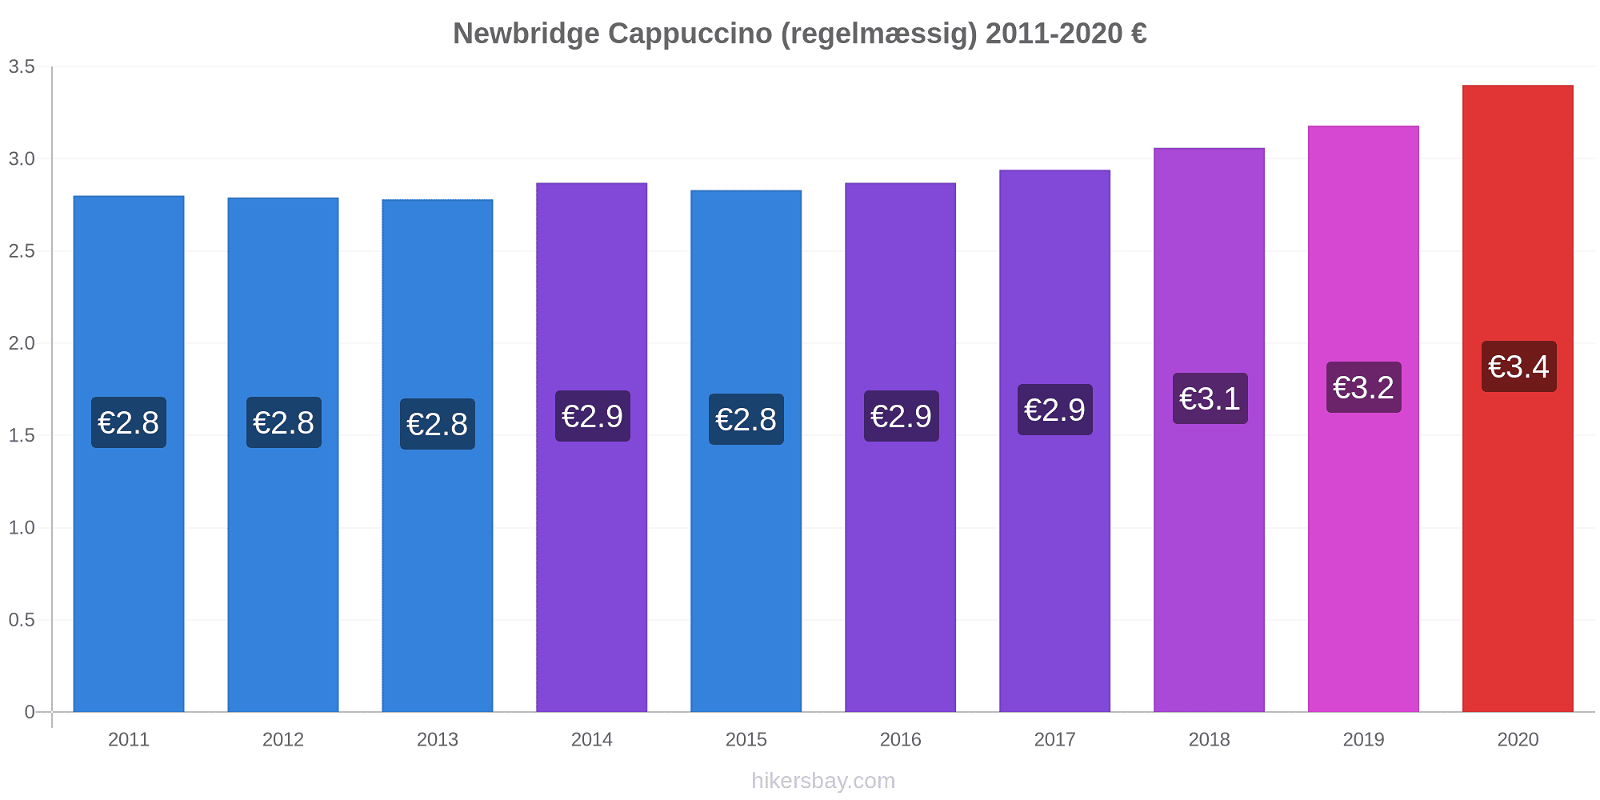 Newbridge prisændringer Cappuccino (regelmæssig) hikersbay.com